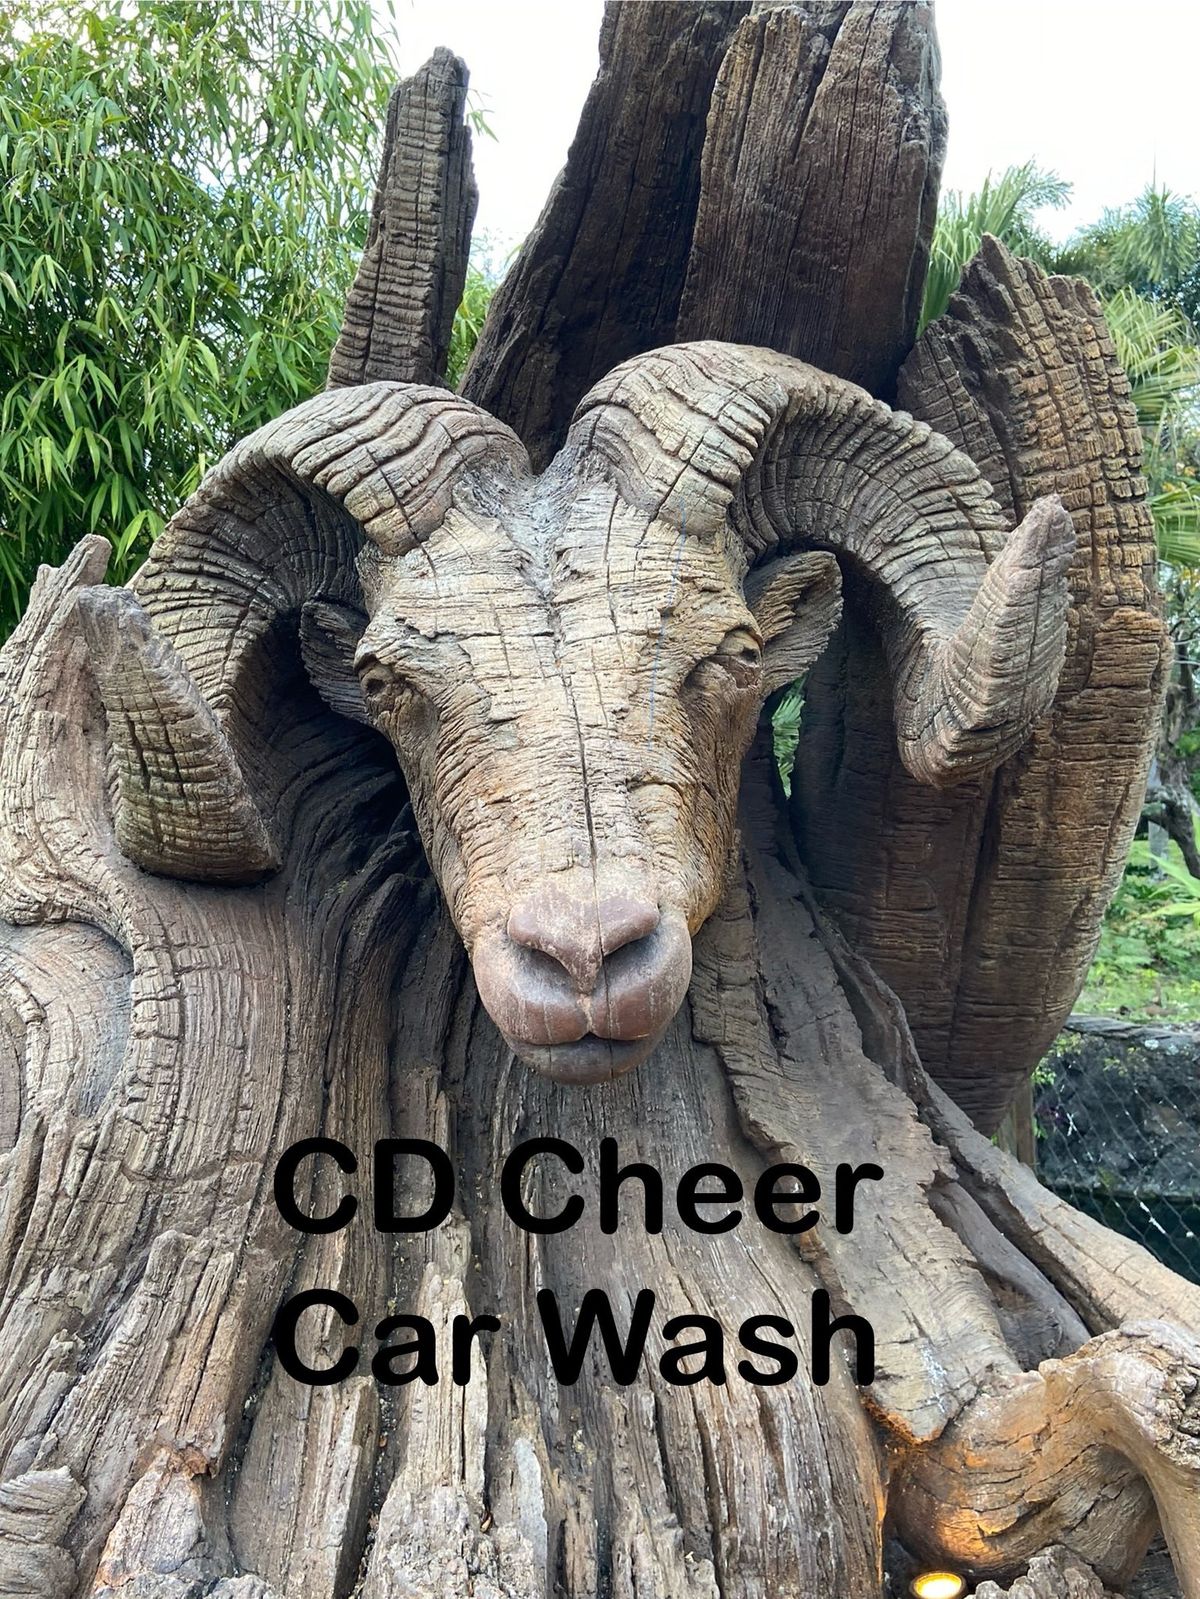 Car Wash Harley Davidson CD Cheer